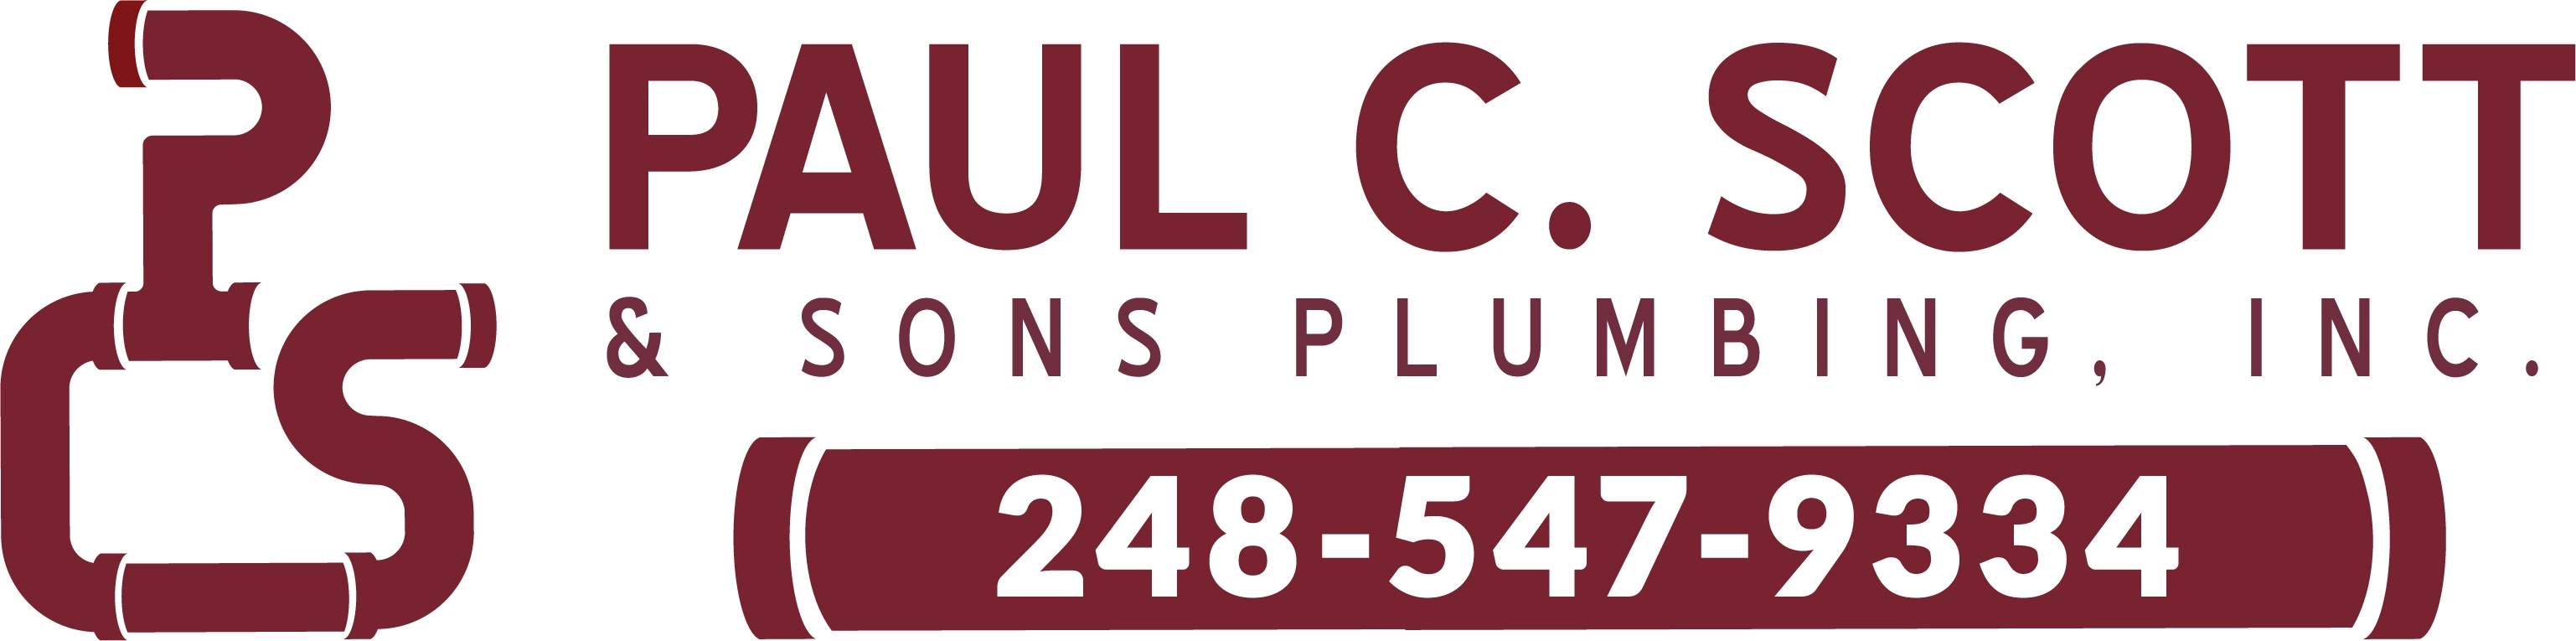 Paul C. Scott & Sons Plumbing, Inc. Logo